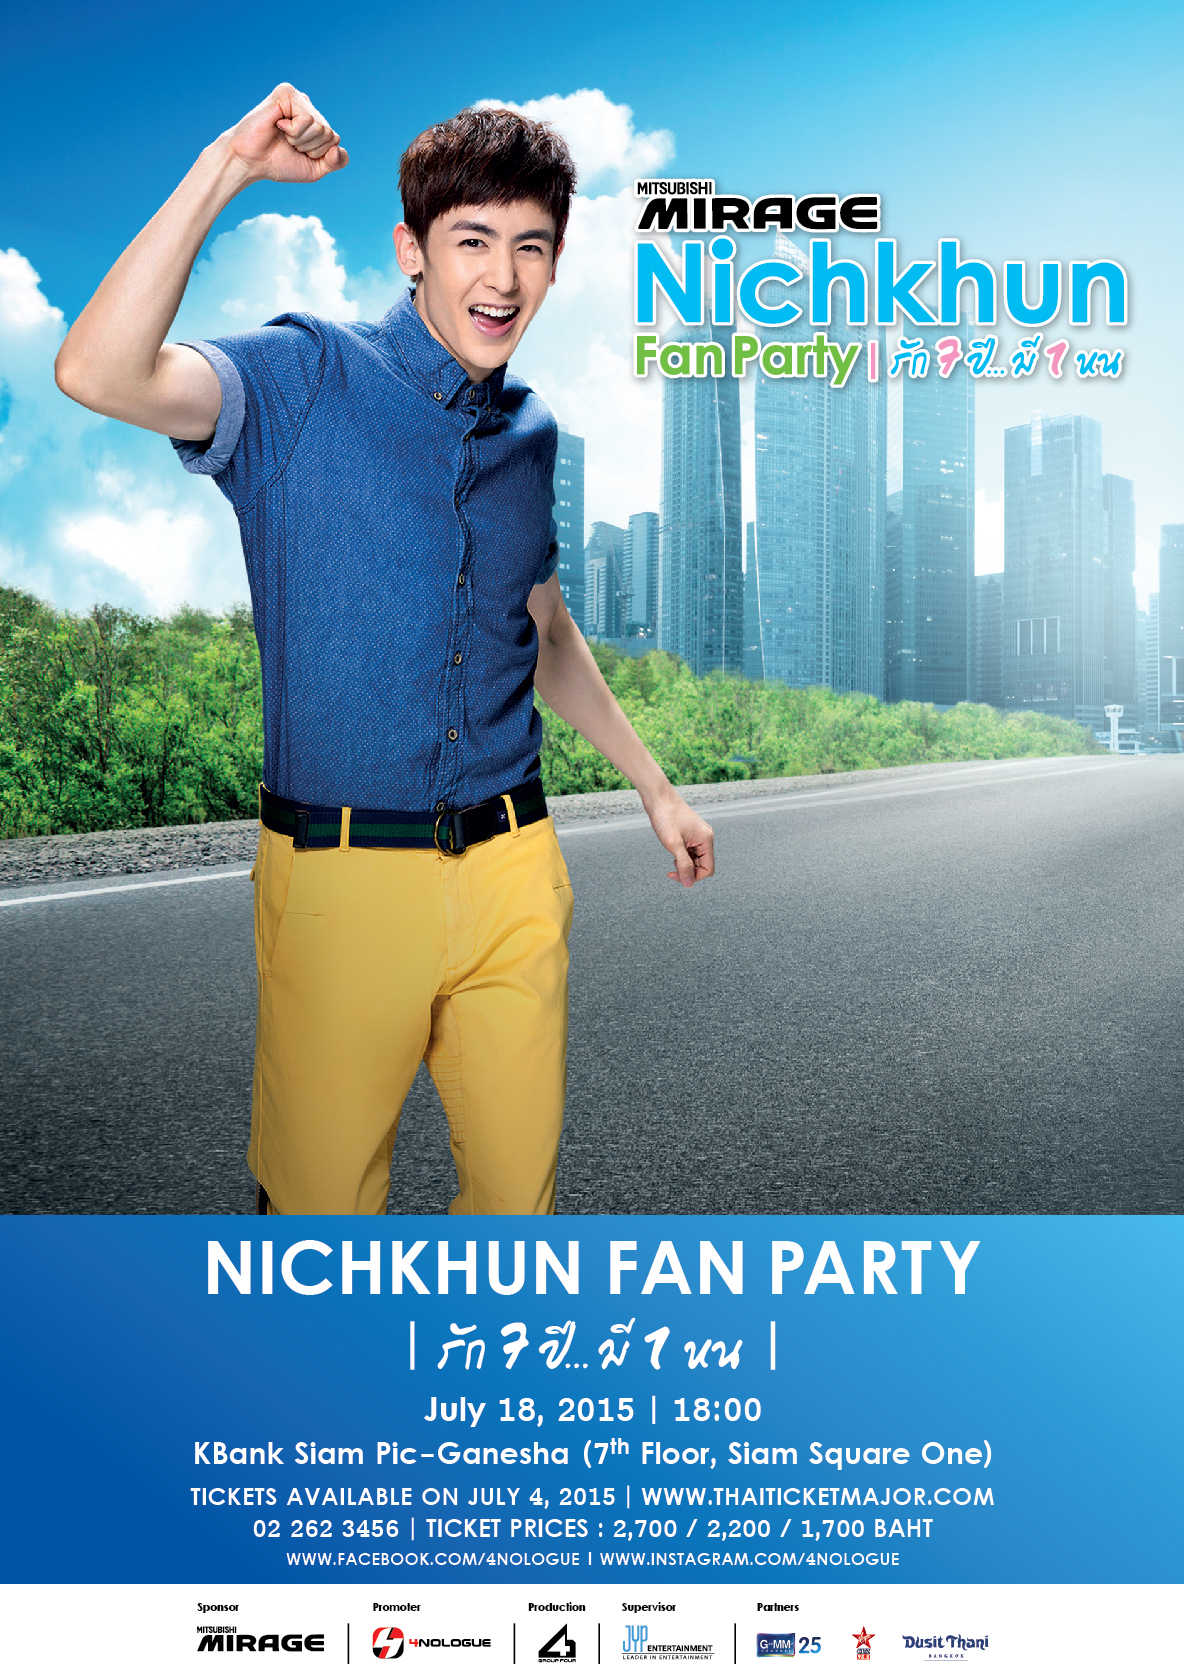 MITSUBISHI MIRAGE Nichkhun Fan Party - Poster V.2 (HQ)